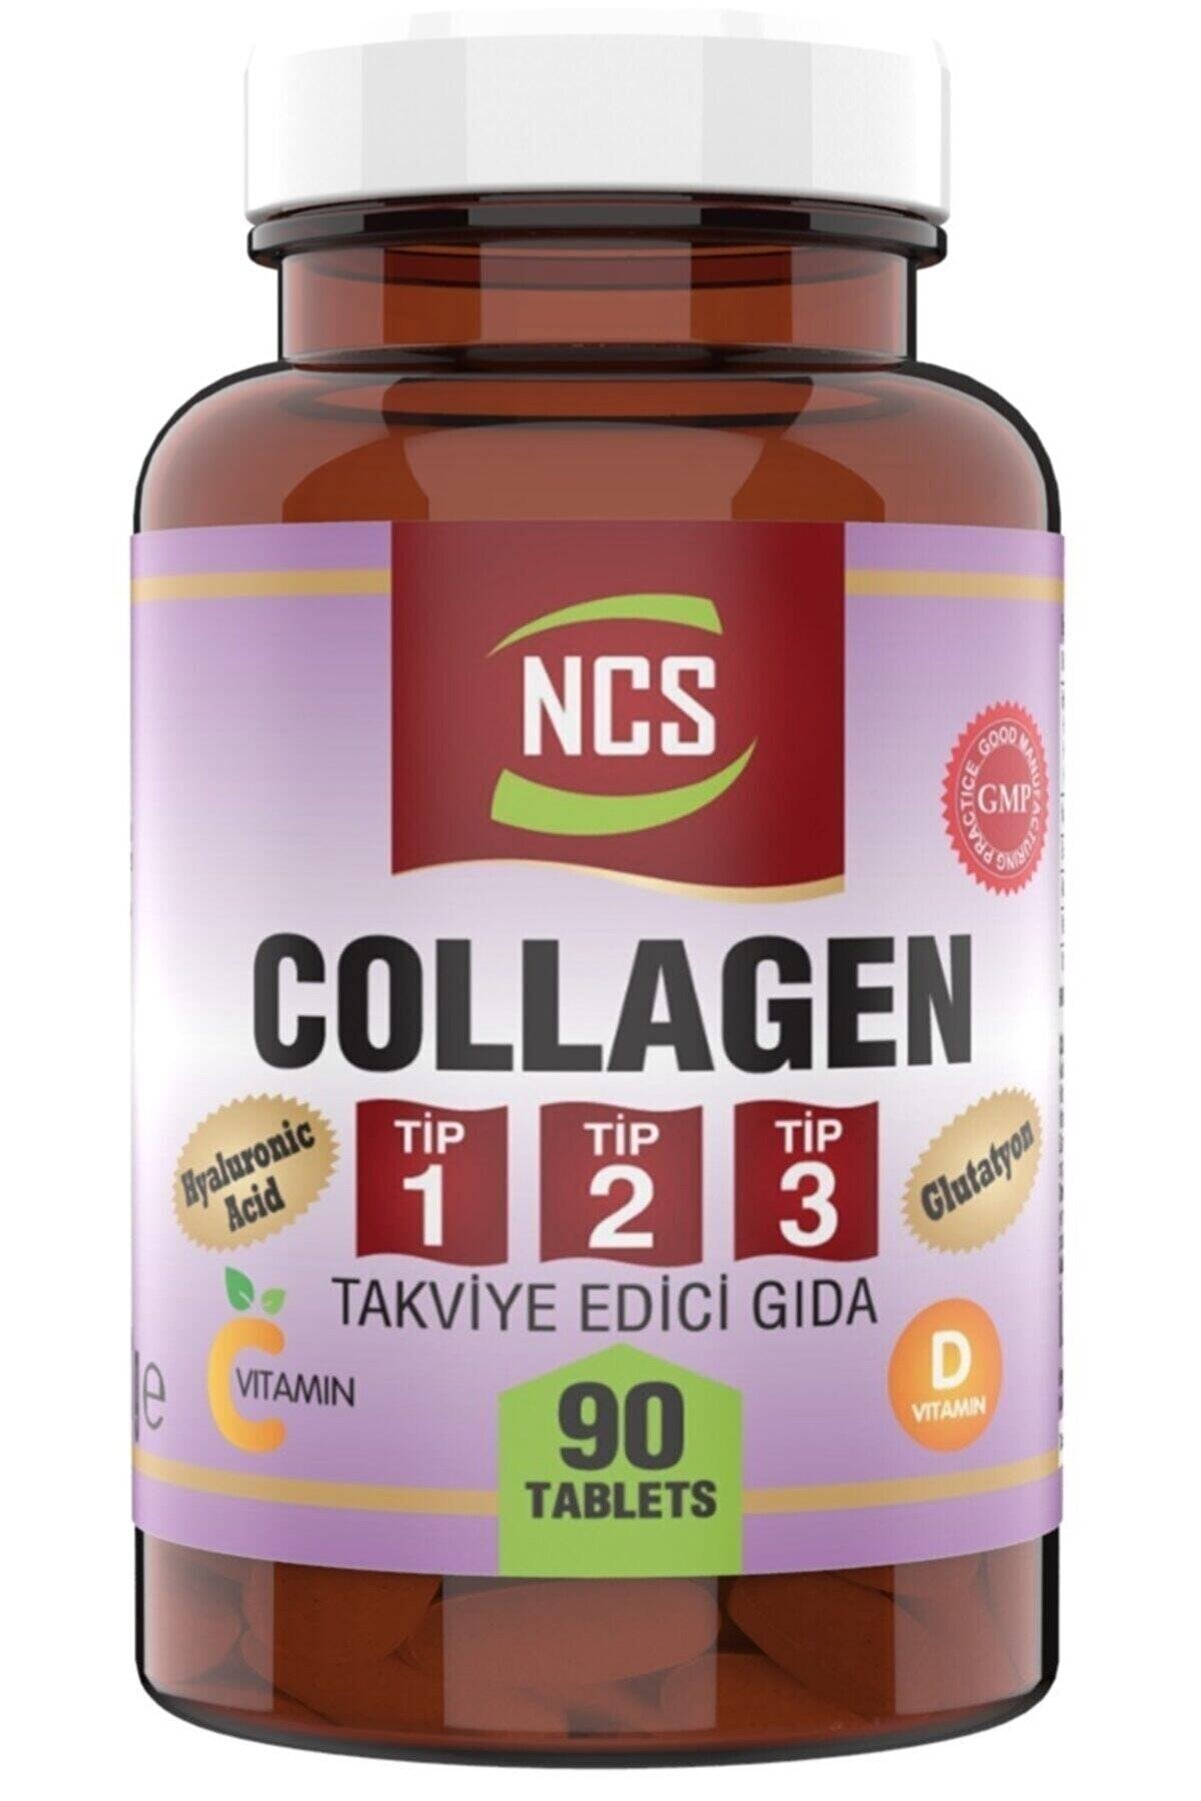 Ncs 90 Tablet Hidrolize Collagen (kolajen) Type (tip) 1-2-3 Hyaluronic Acid Vitamin C &d Glutatyon